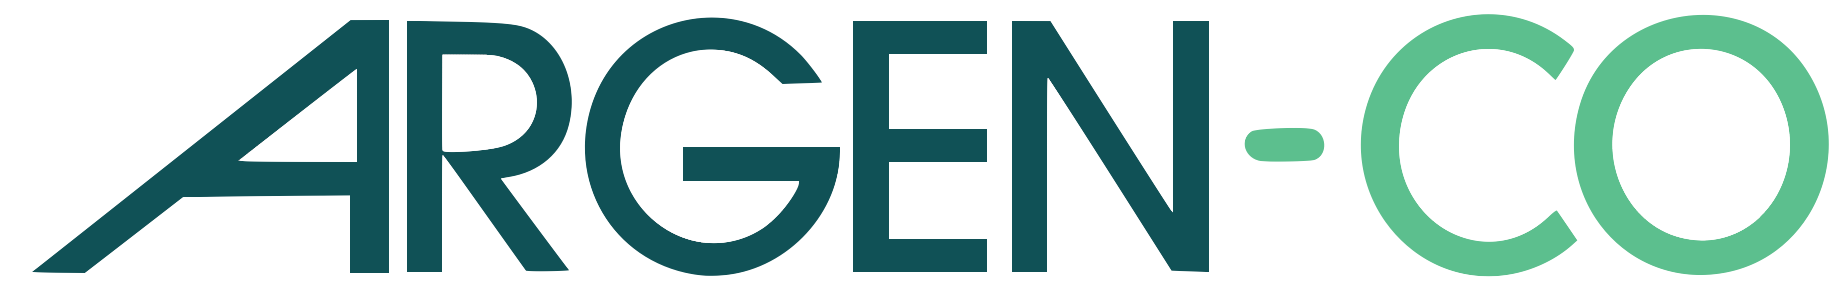 Argen-co logo_green.2f3351b2a0ce6caf134c_van website